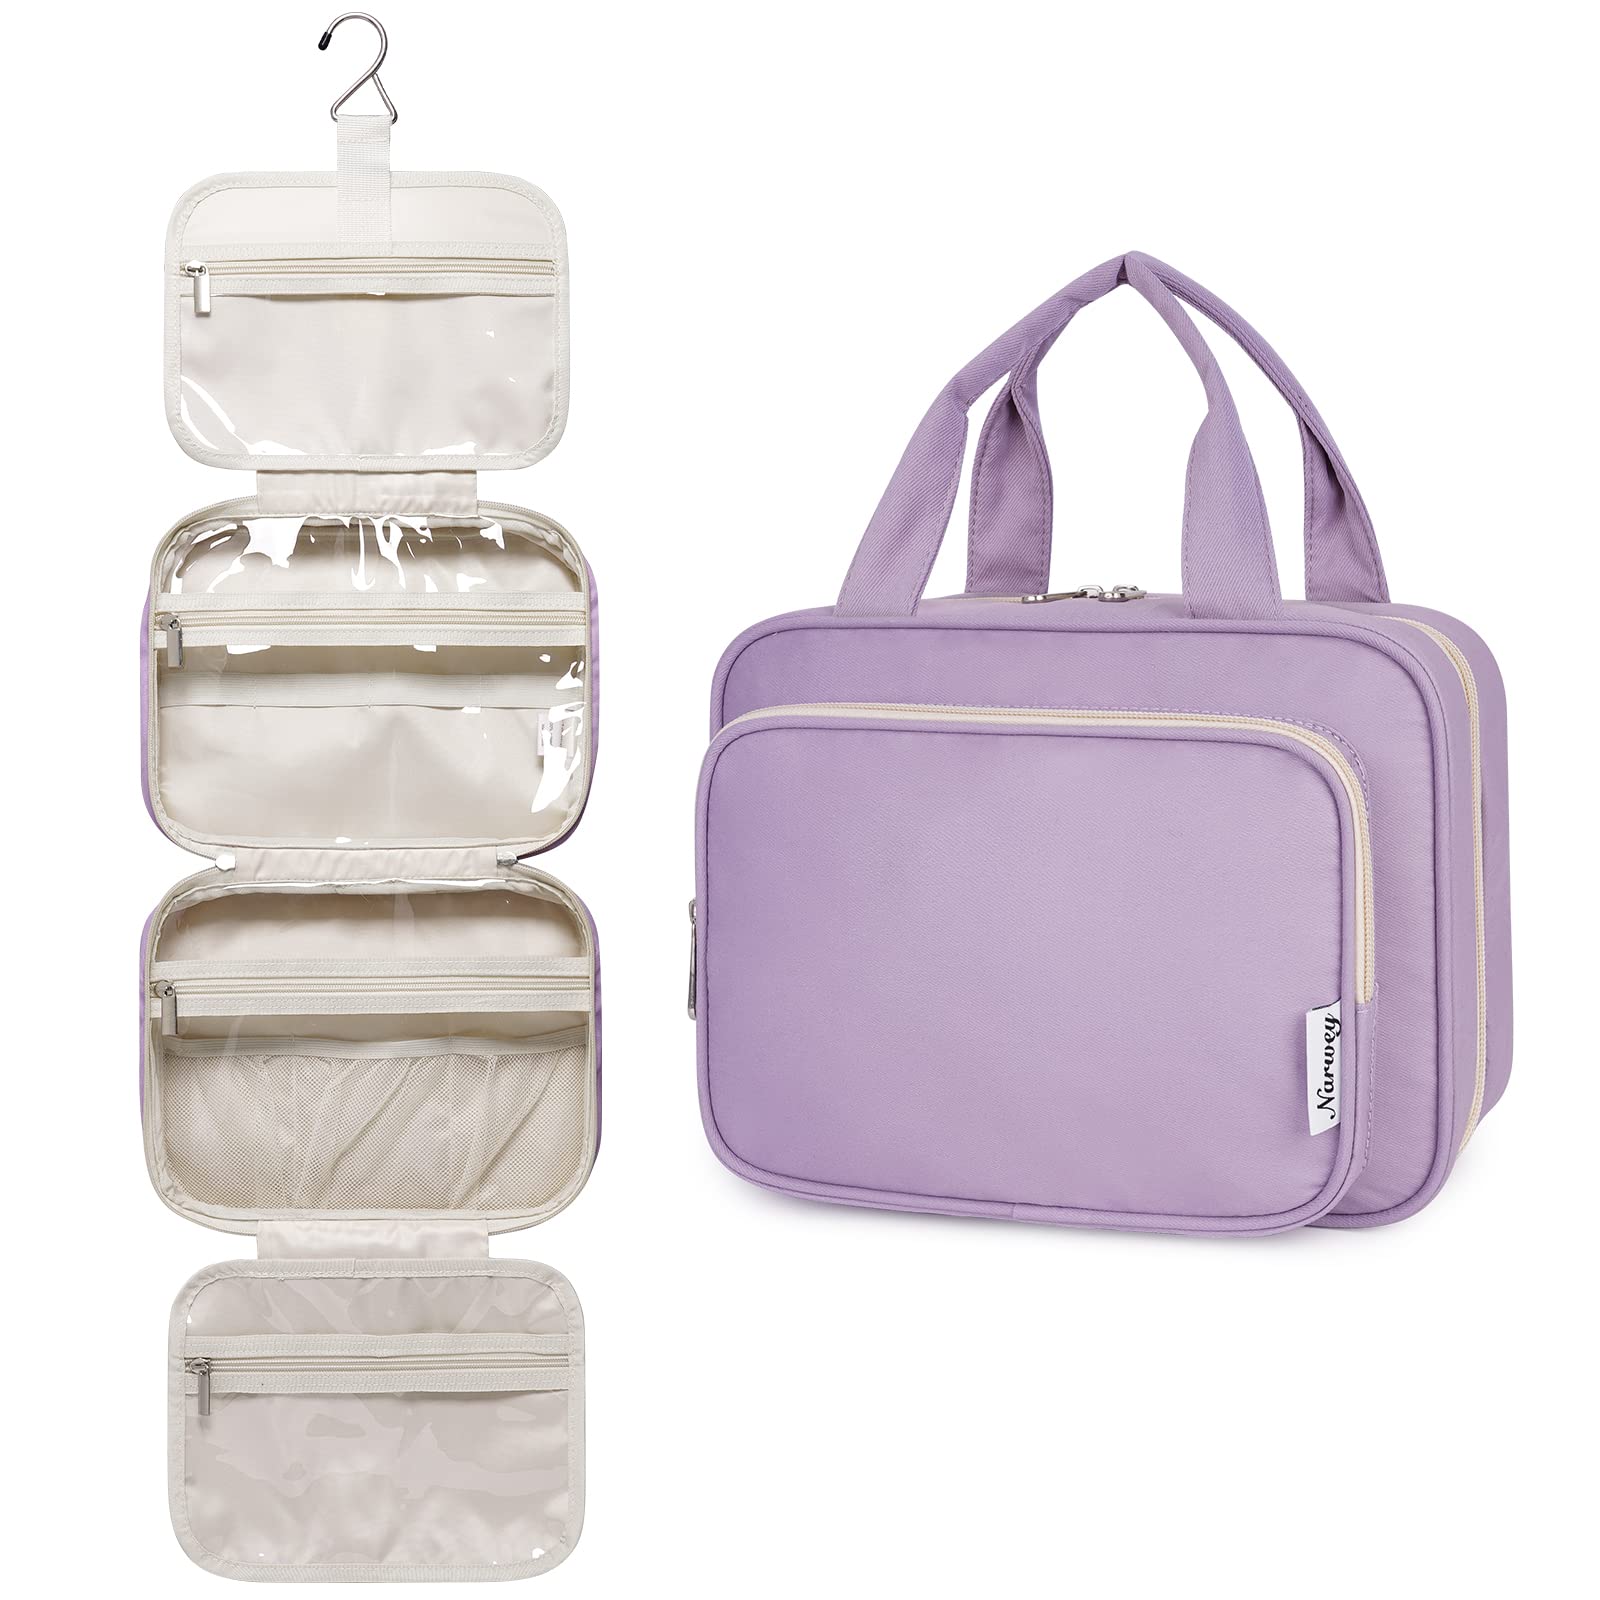 Guess Silvana Multicolor Woven Straw Two Compartment Tote Bag | Dillard's